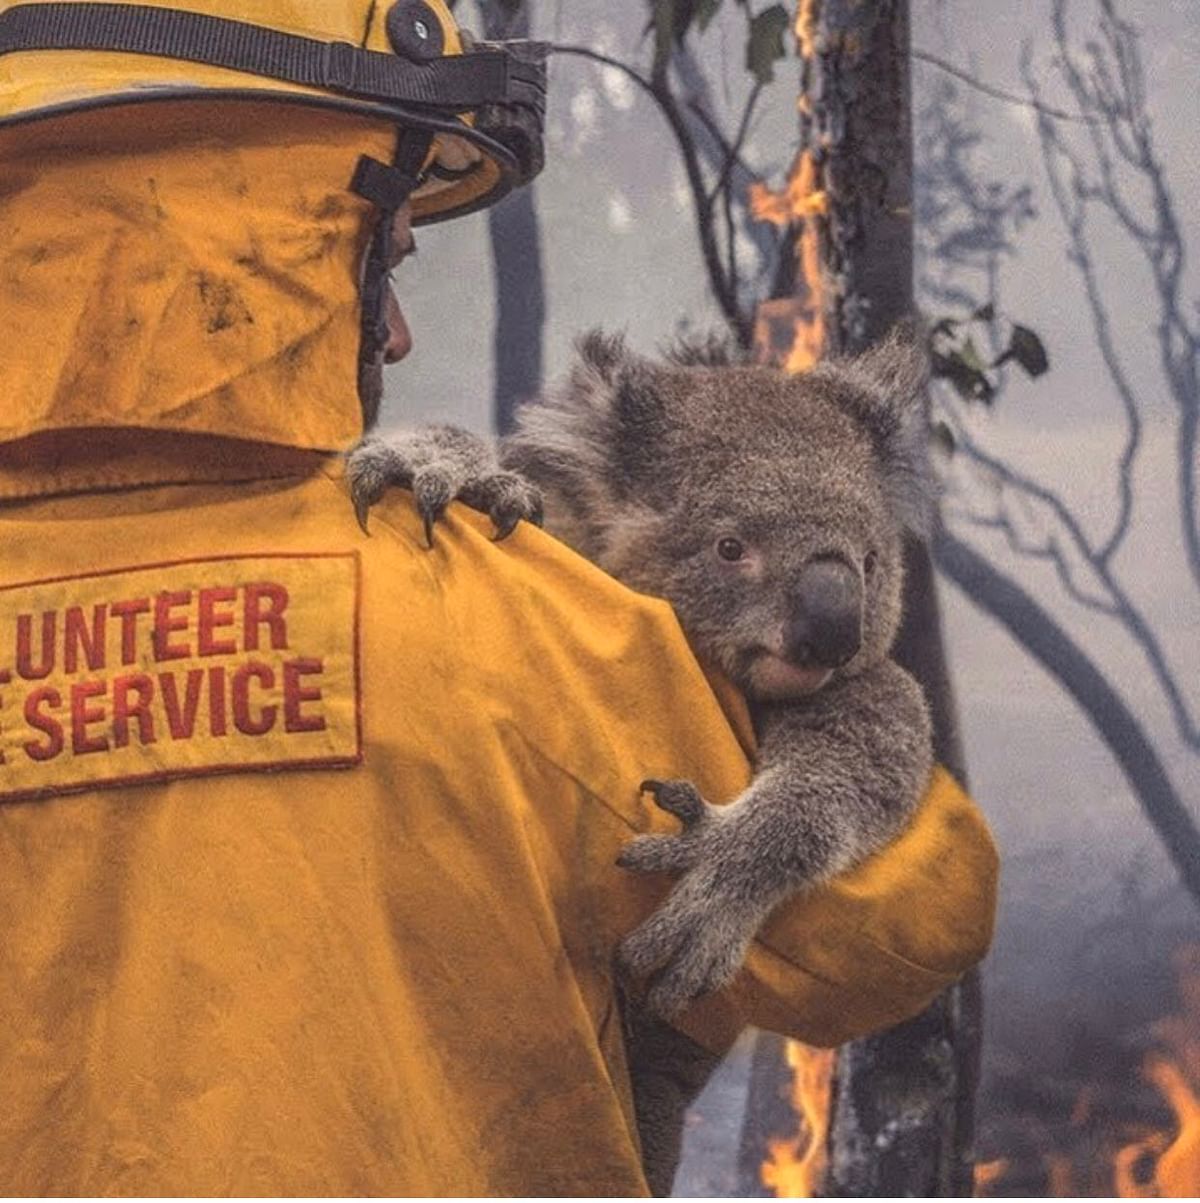 AUSTRALIA FIRE